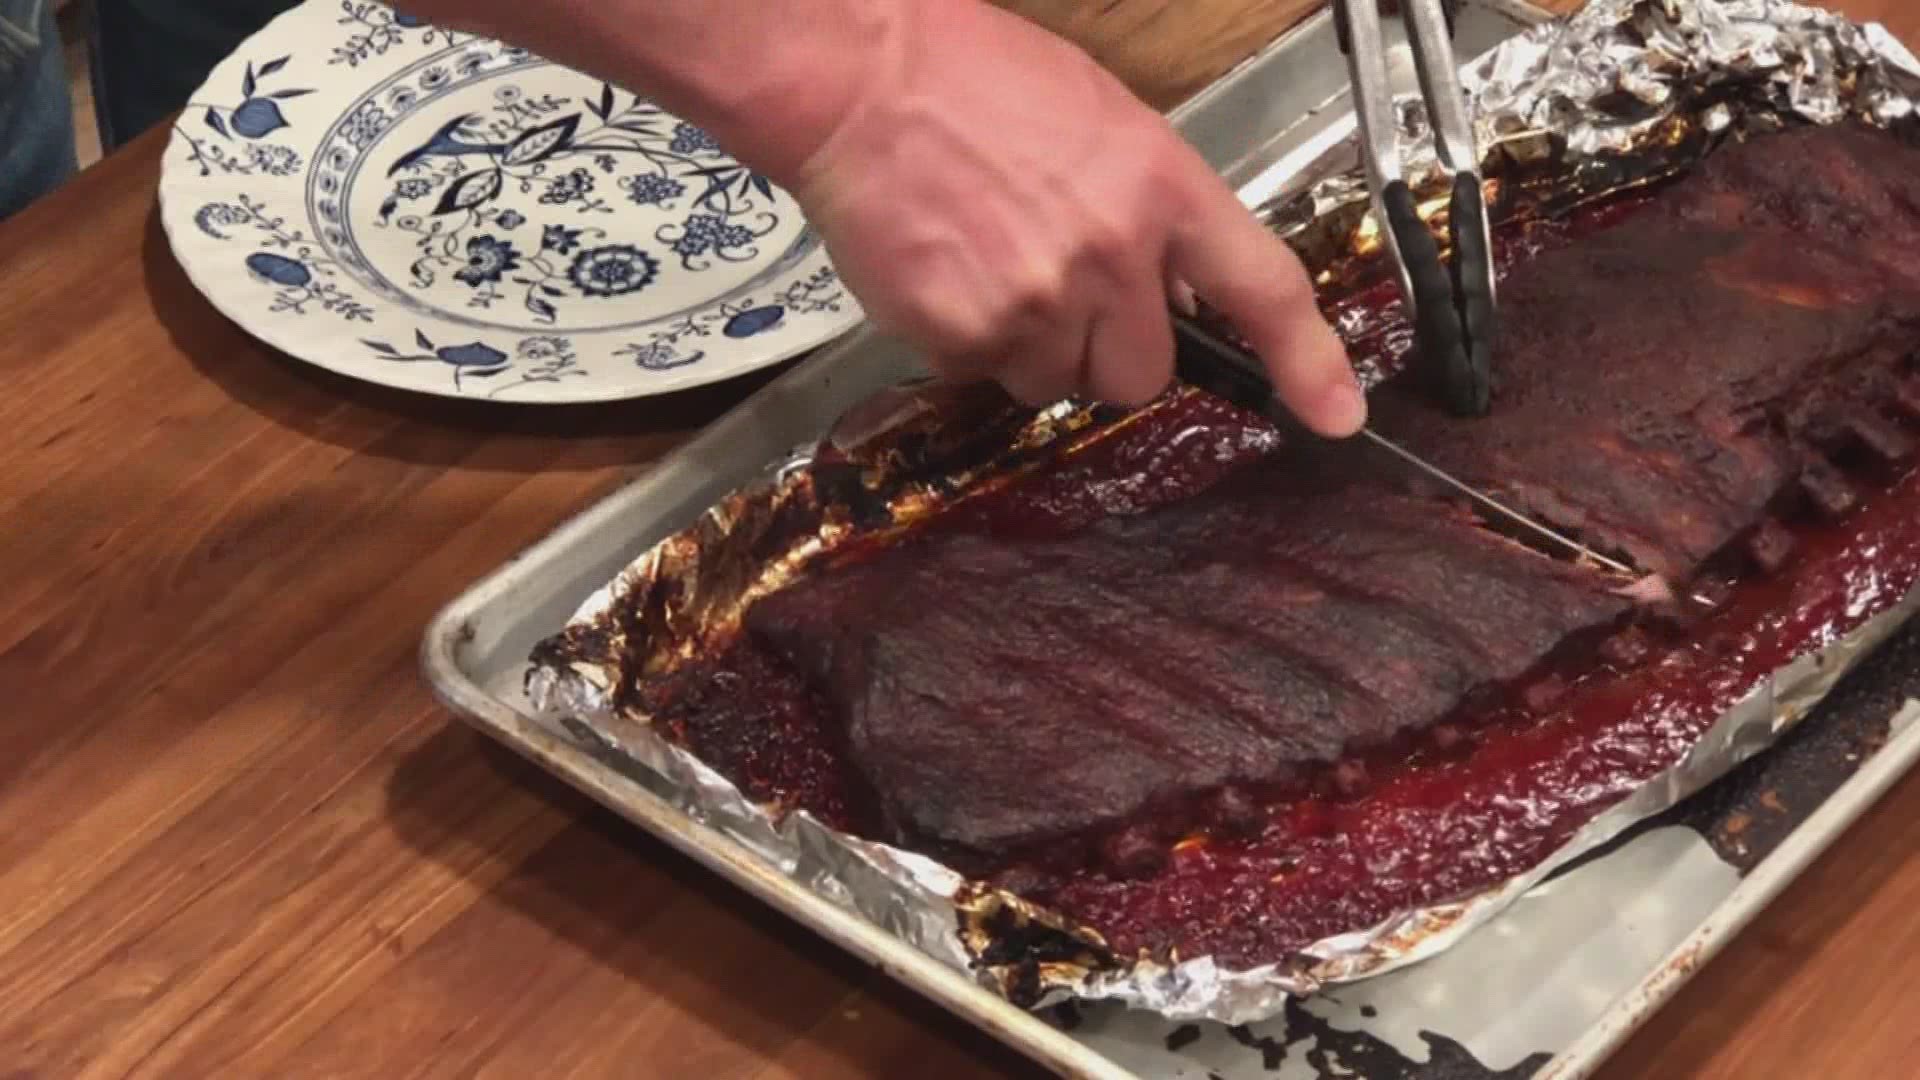 The Gentleman Farmer in Maine shares two rib seasoning recipes on 207.